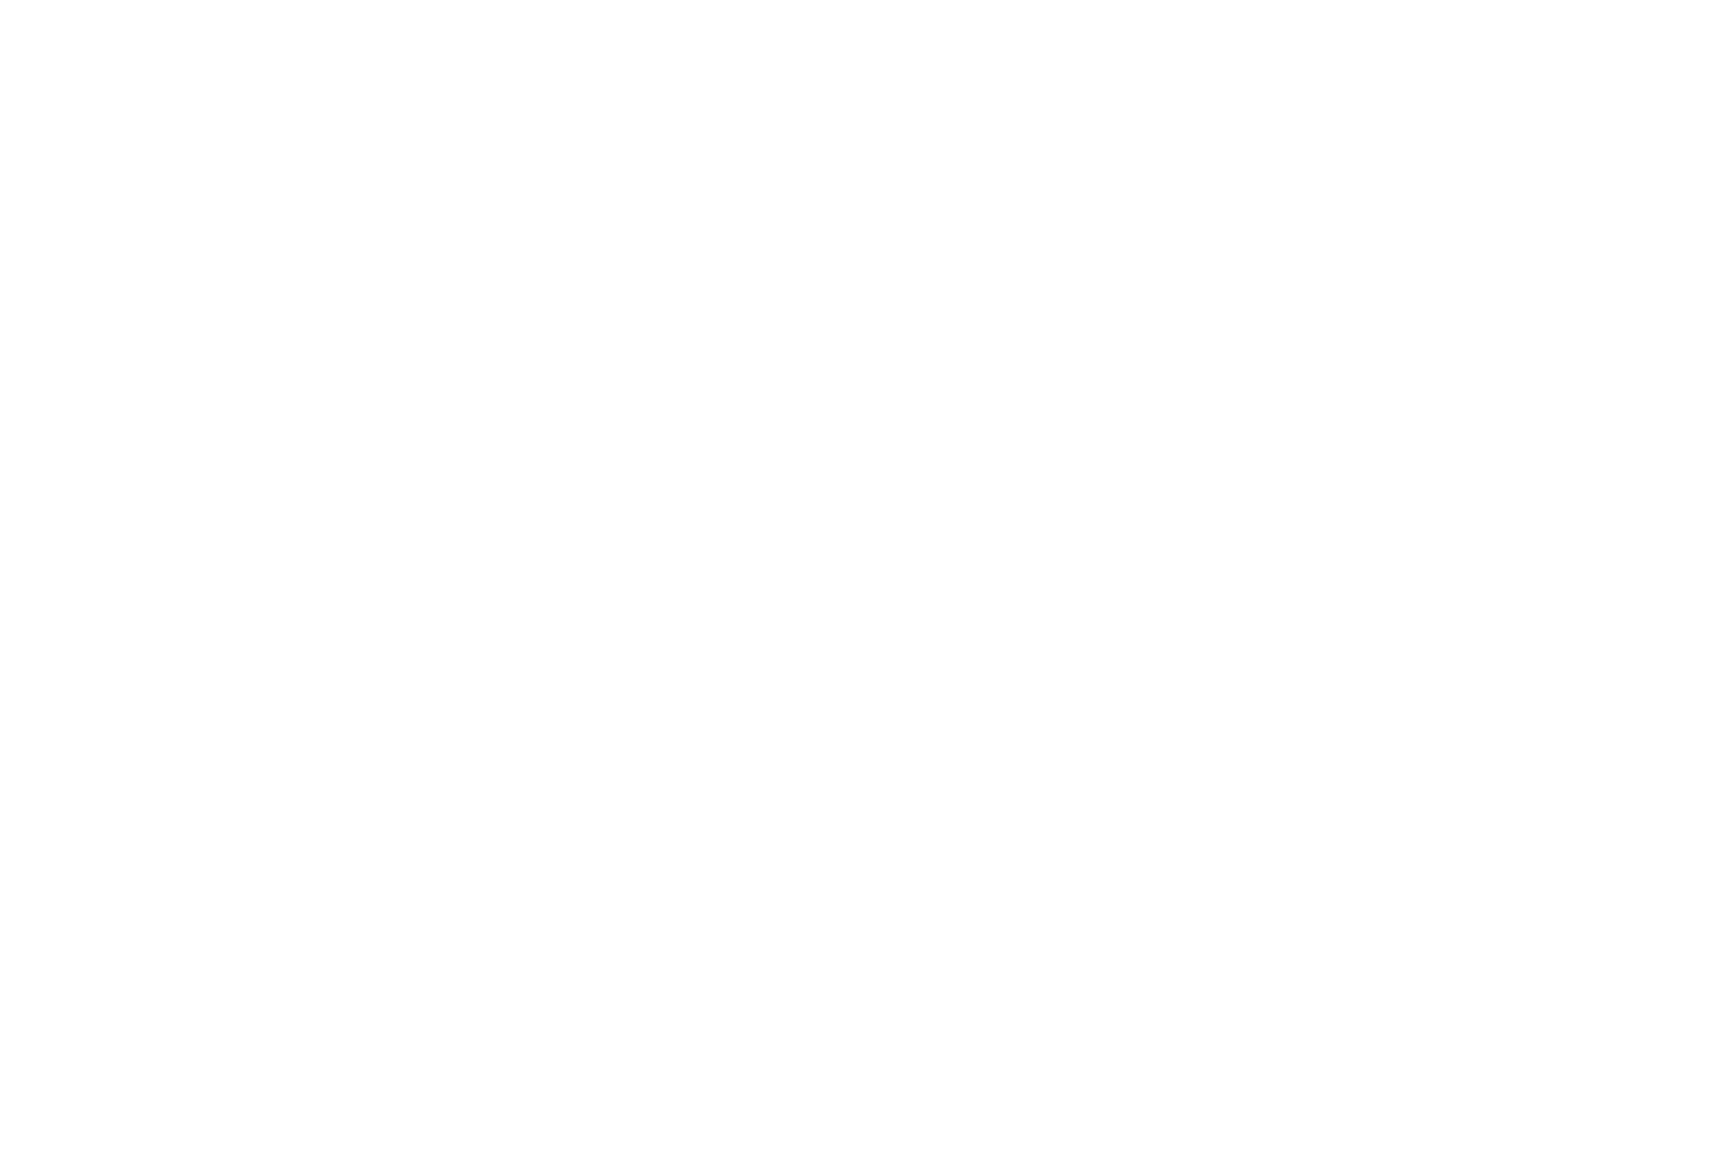 BEST MUSIC VIDEO - CANADA INDEPENDENT FILM FESTIVAL - 2022